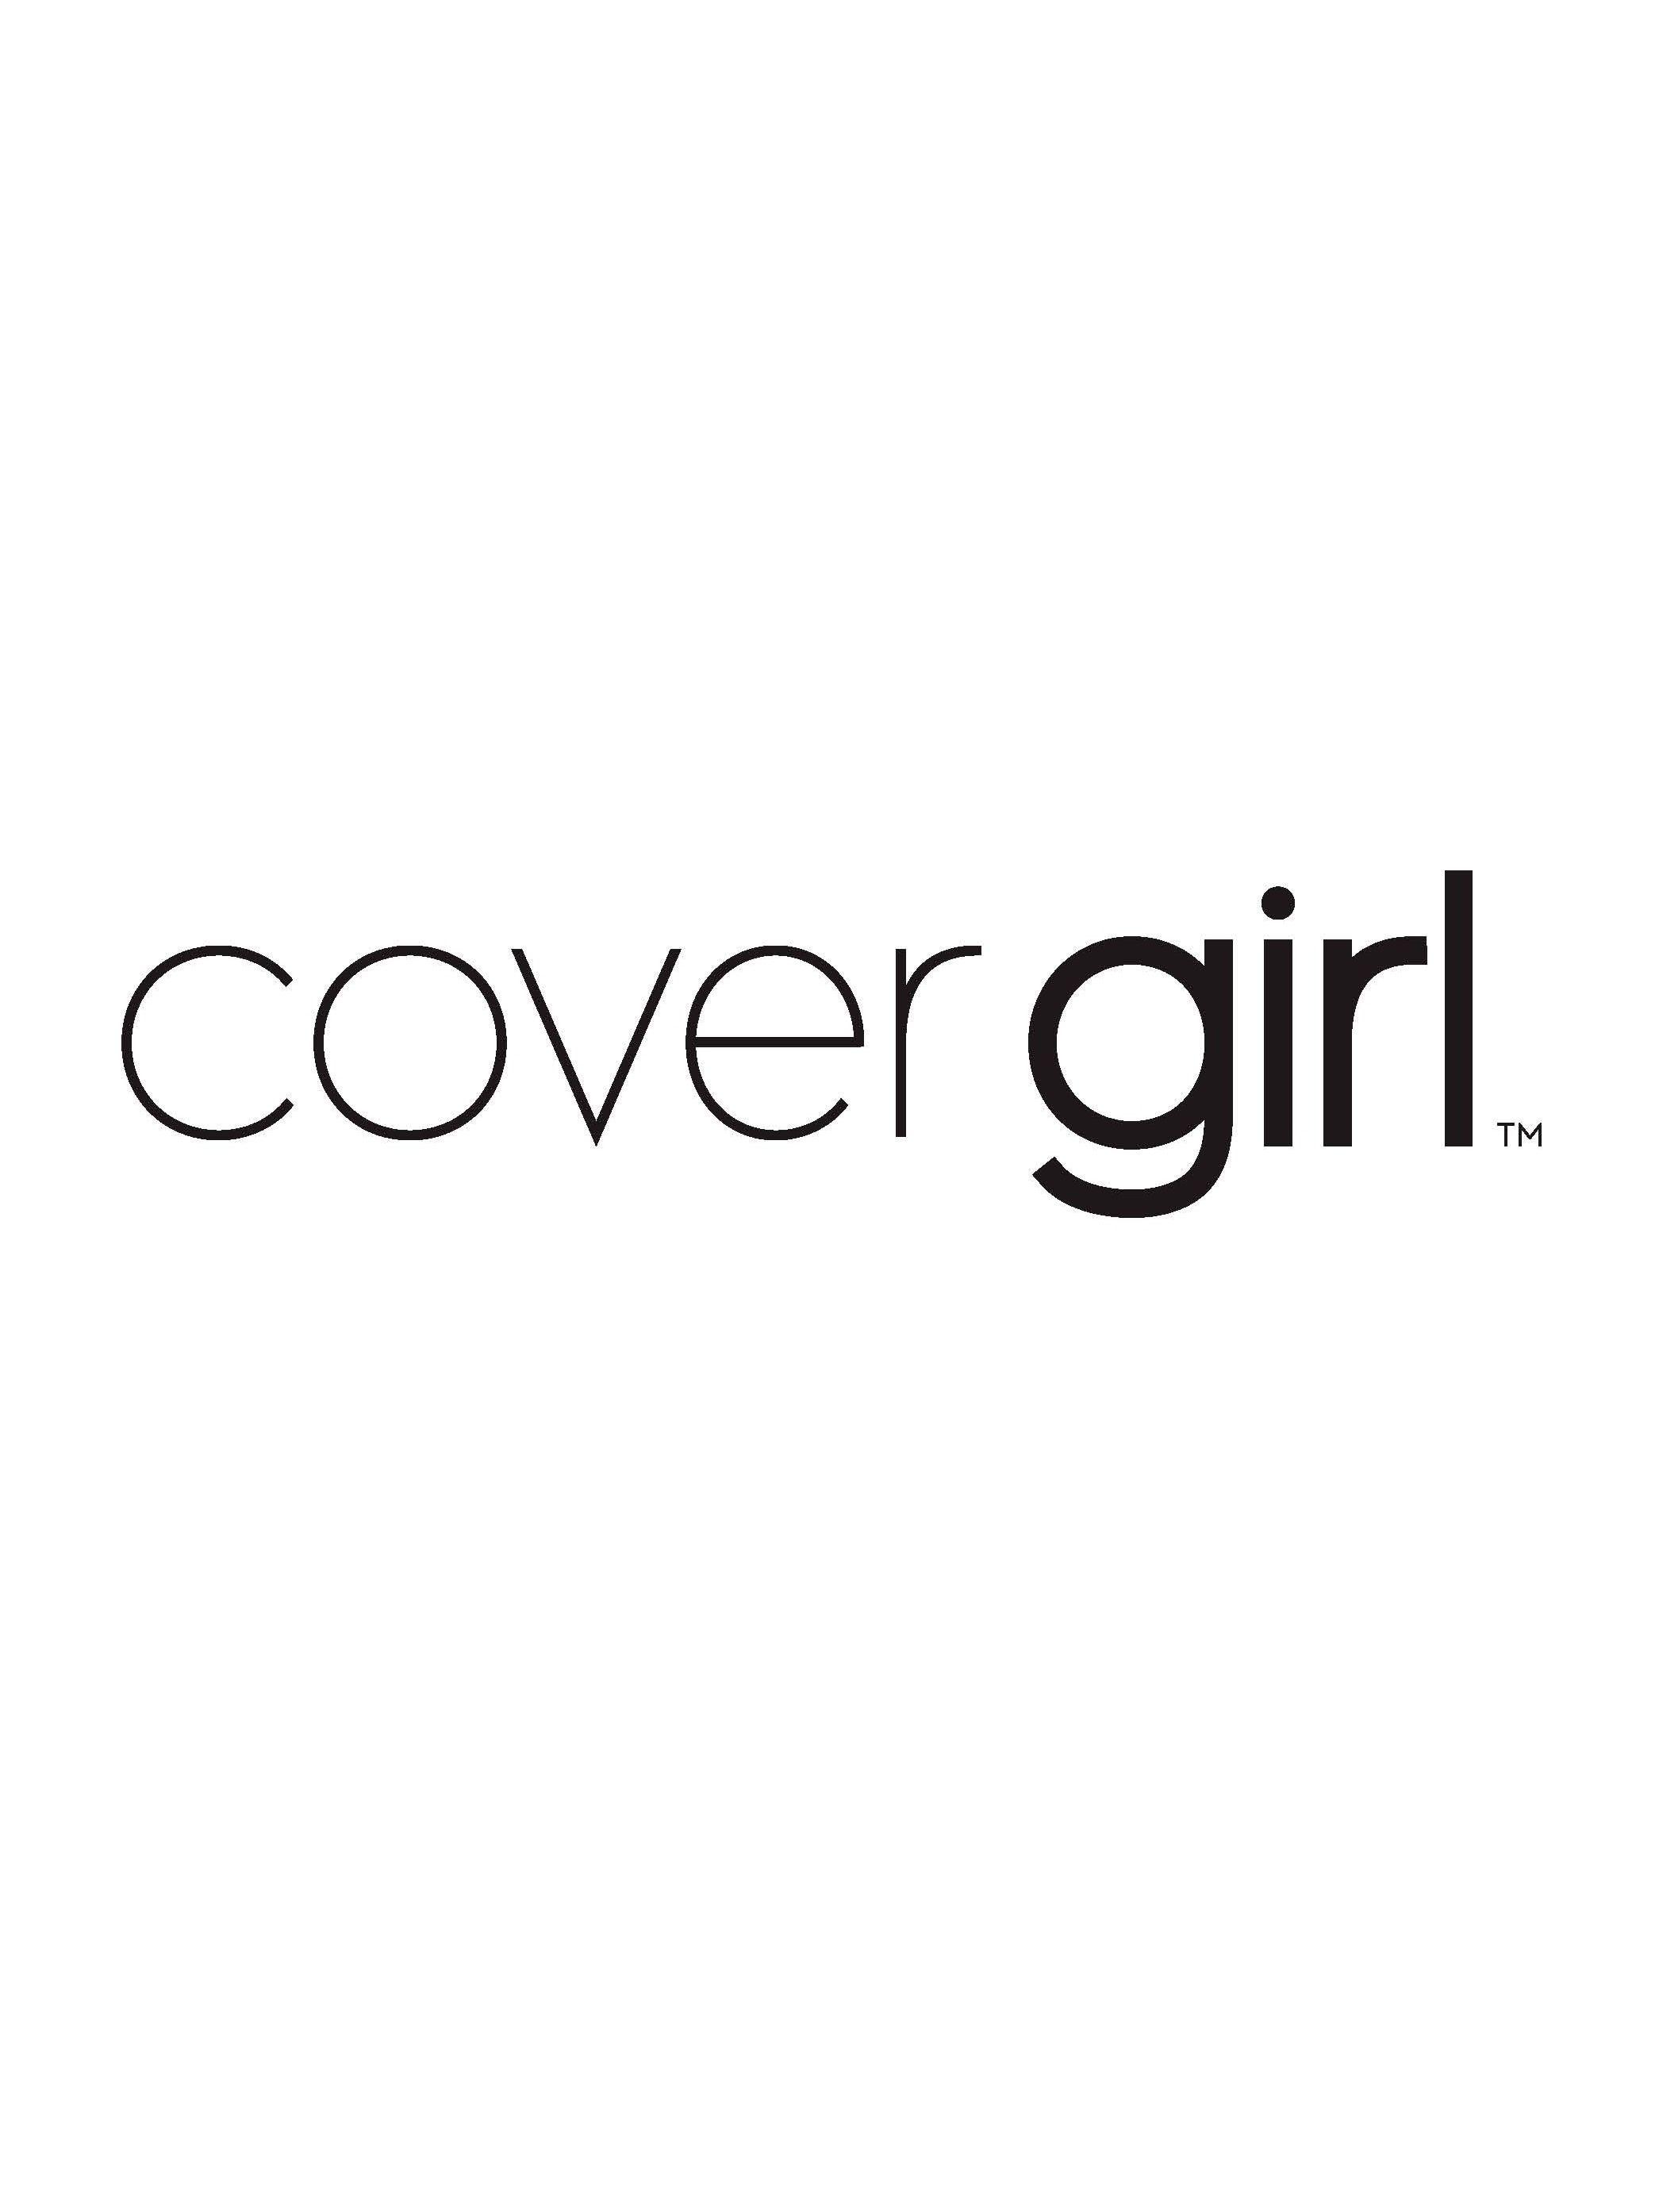 Covergirl Logo - Covergirl logo - Accessories Magazine